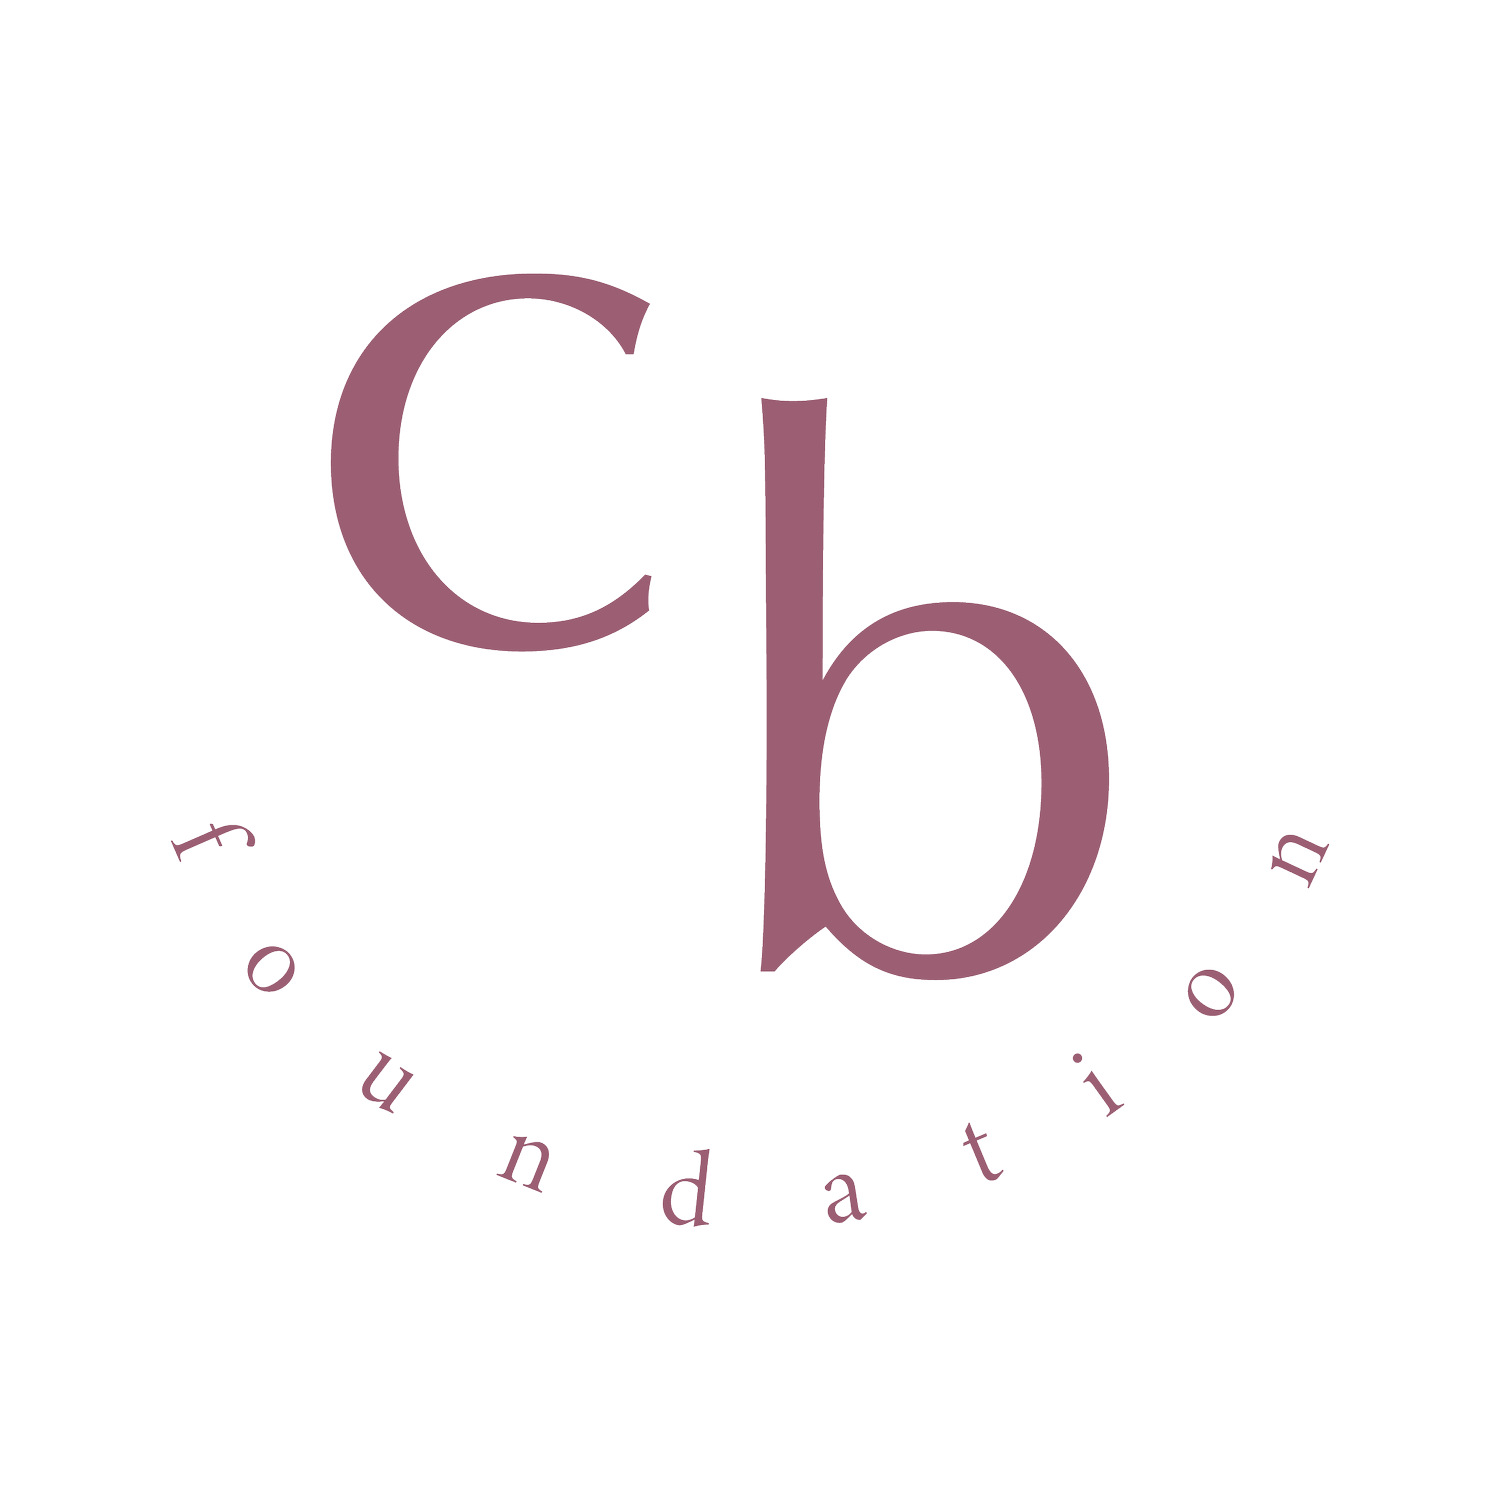 Cosa Buena Foundation